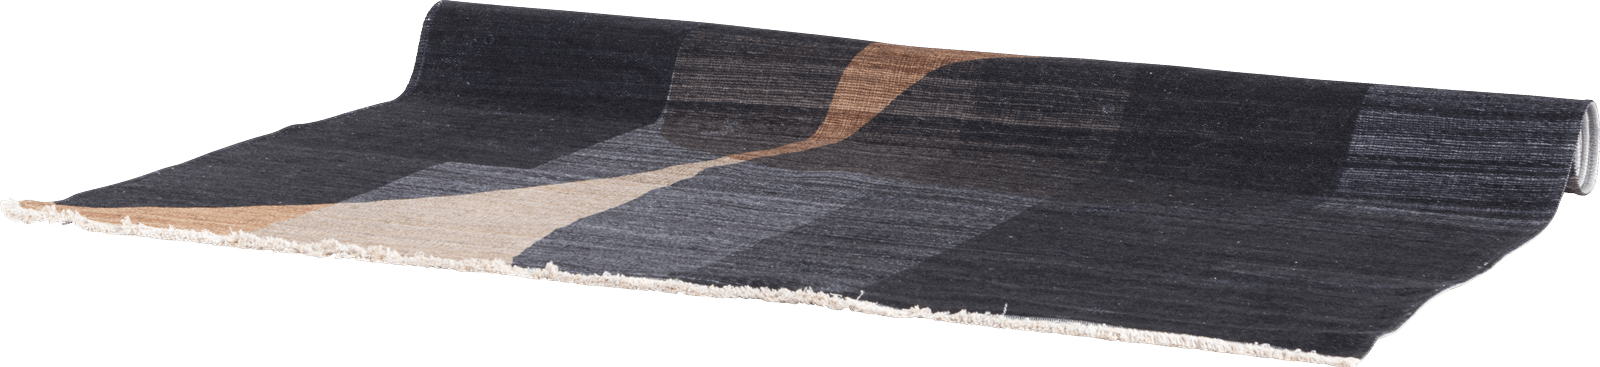 XOOON - Coco Maison - Rubio rug 160x230cm